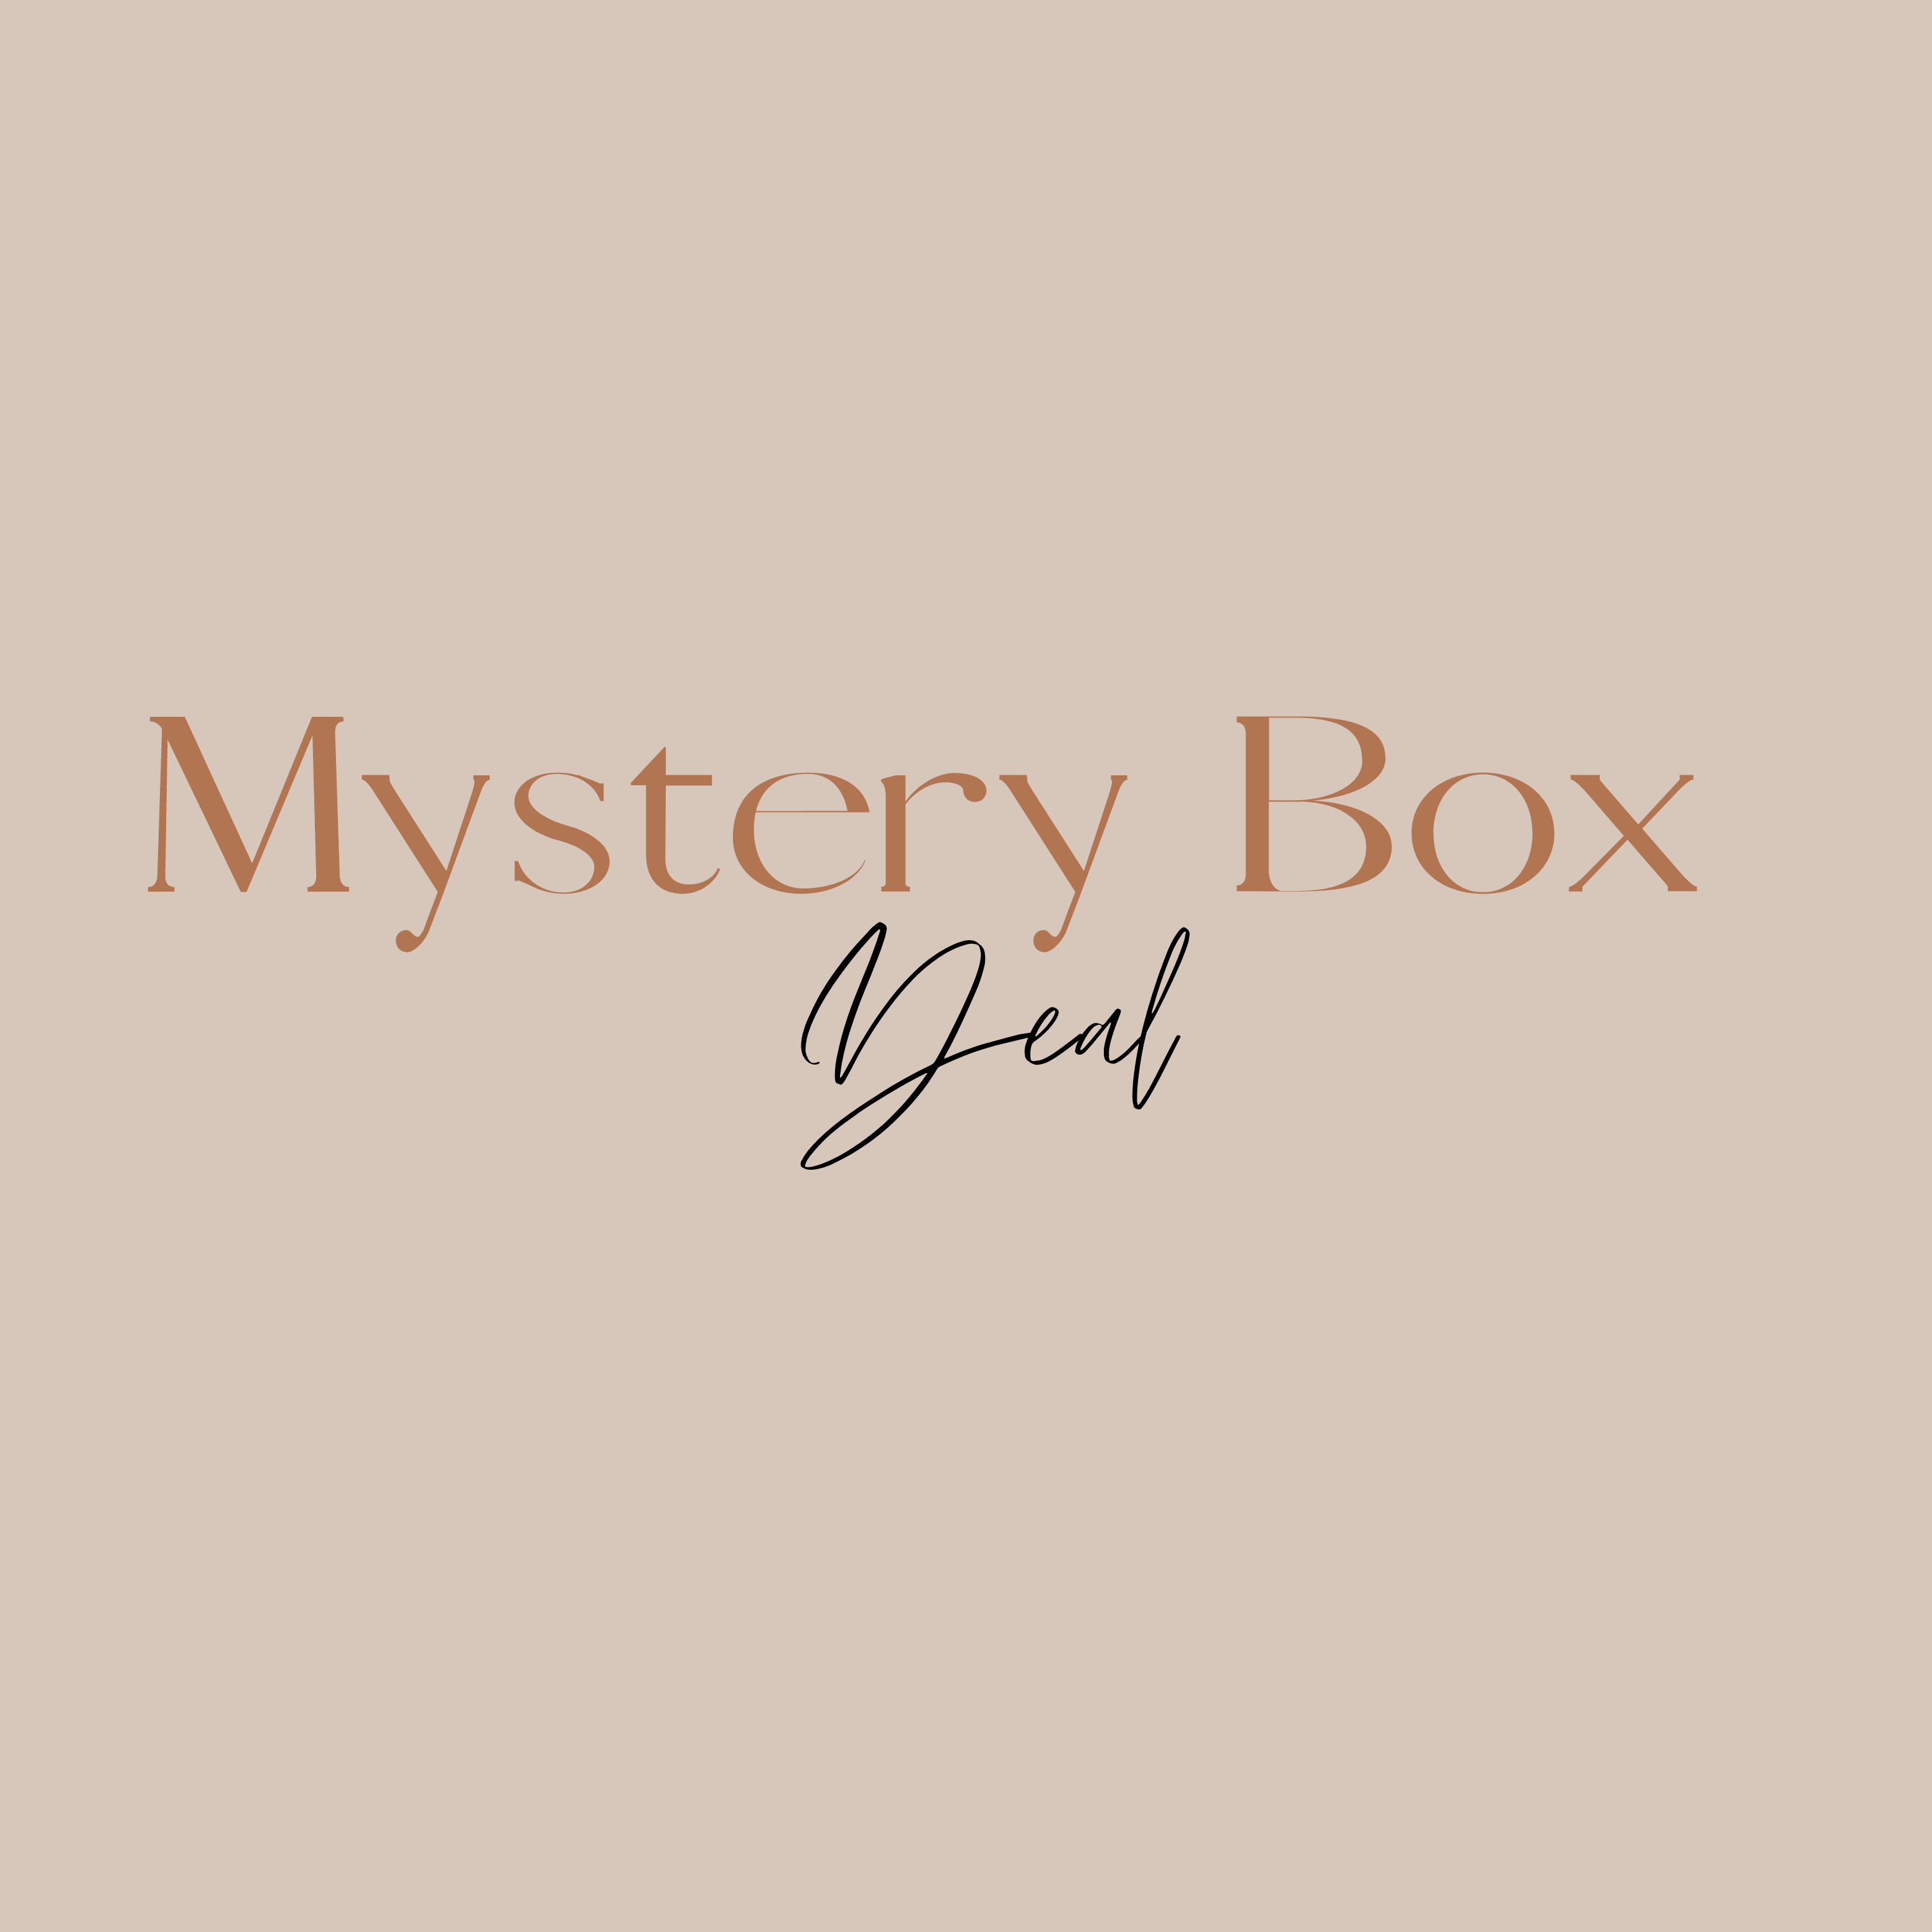 MYSTERY BOX DEAL